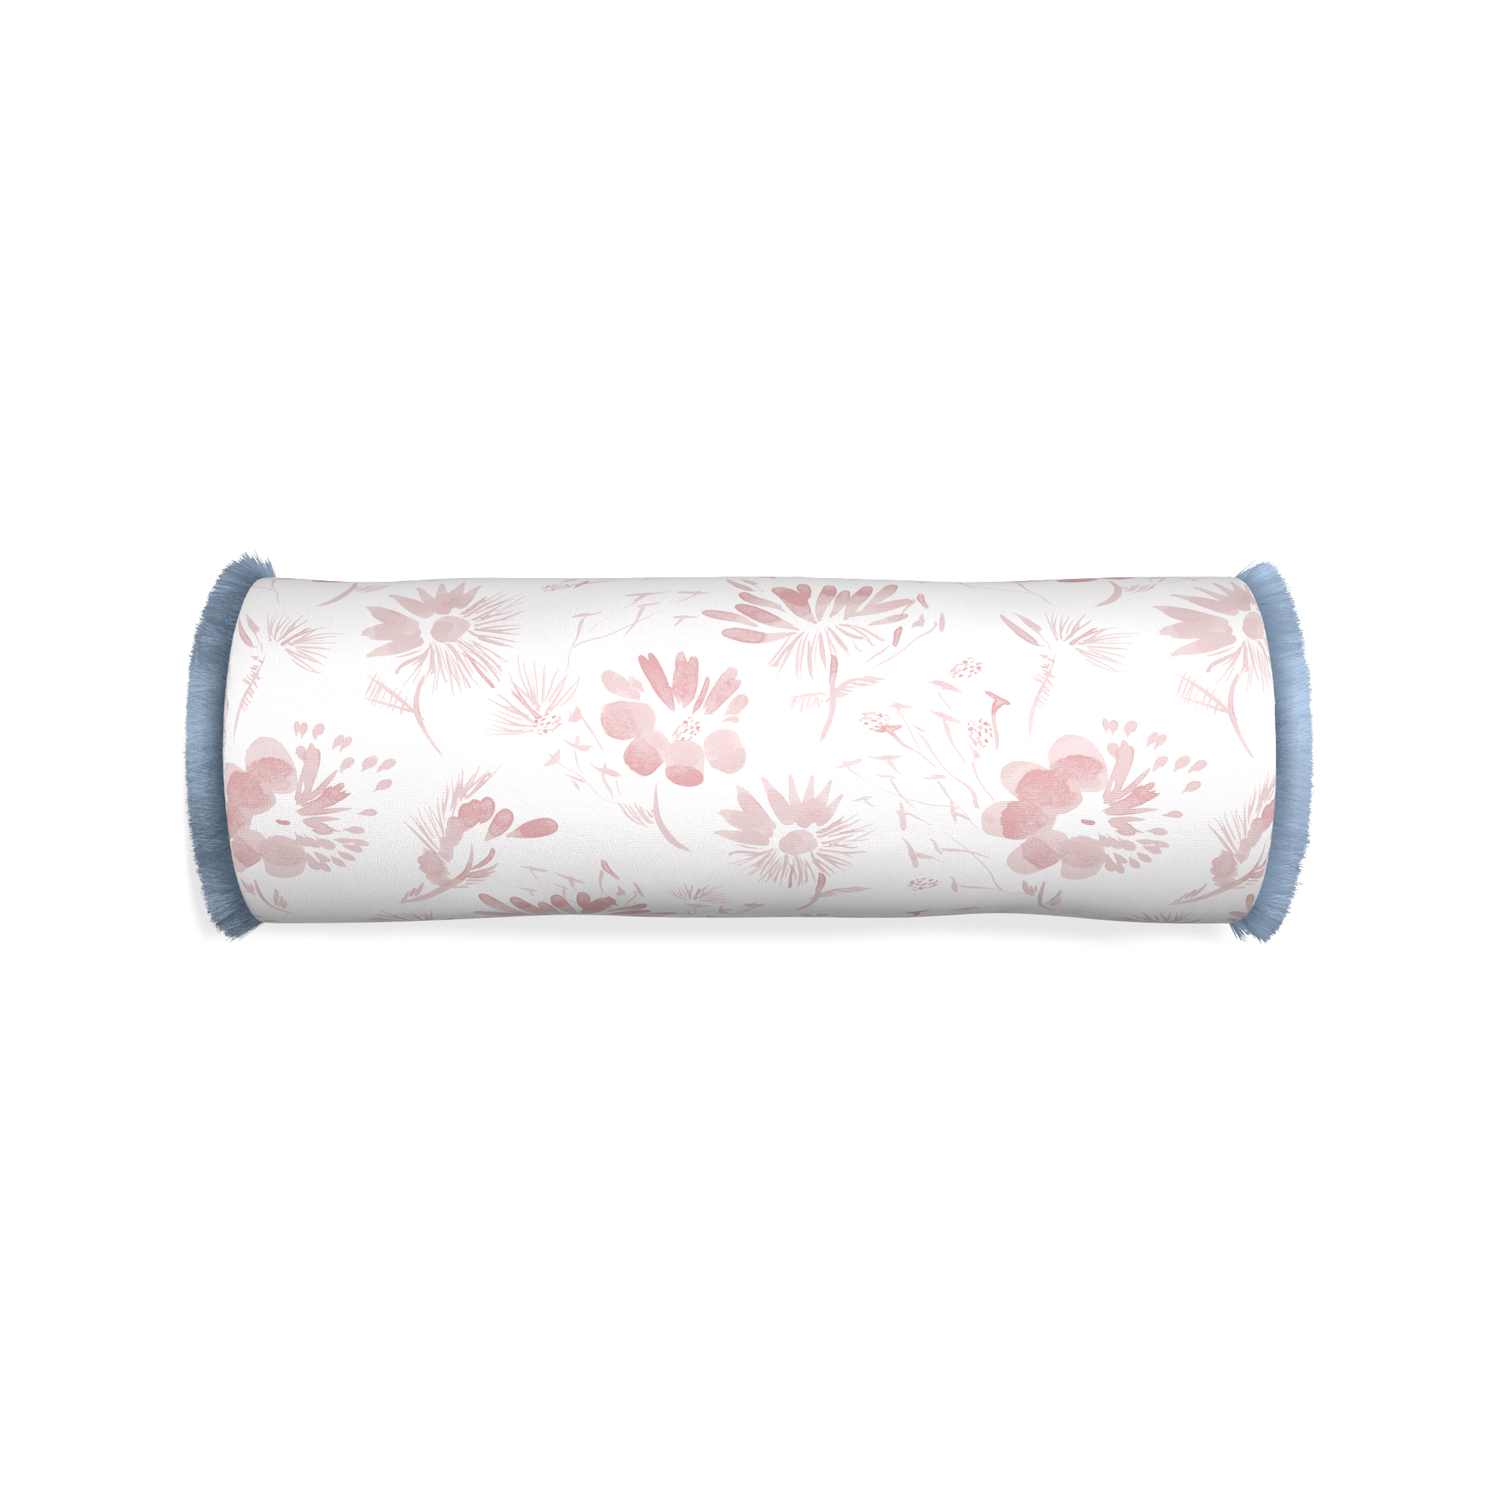 Bolster blake custom pink floralpillow with sky fringe on white background